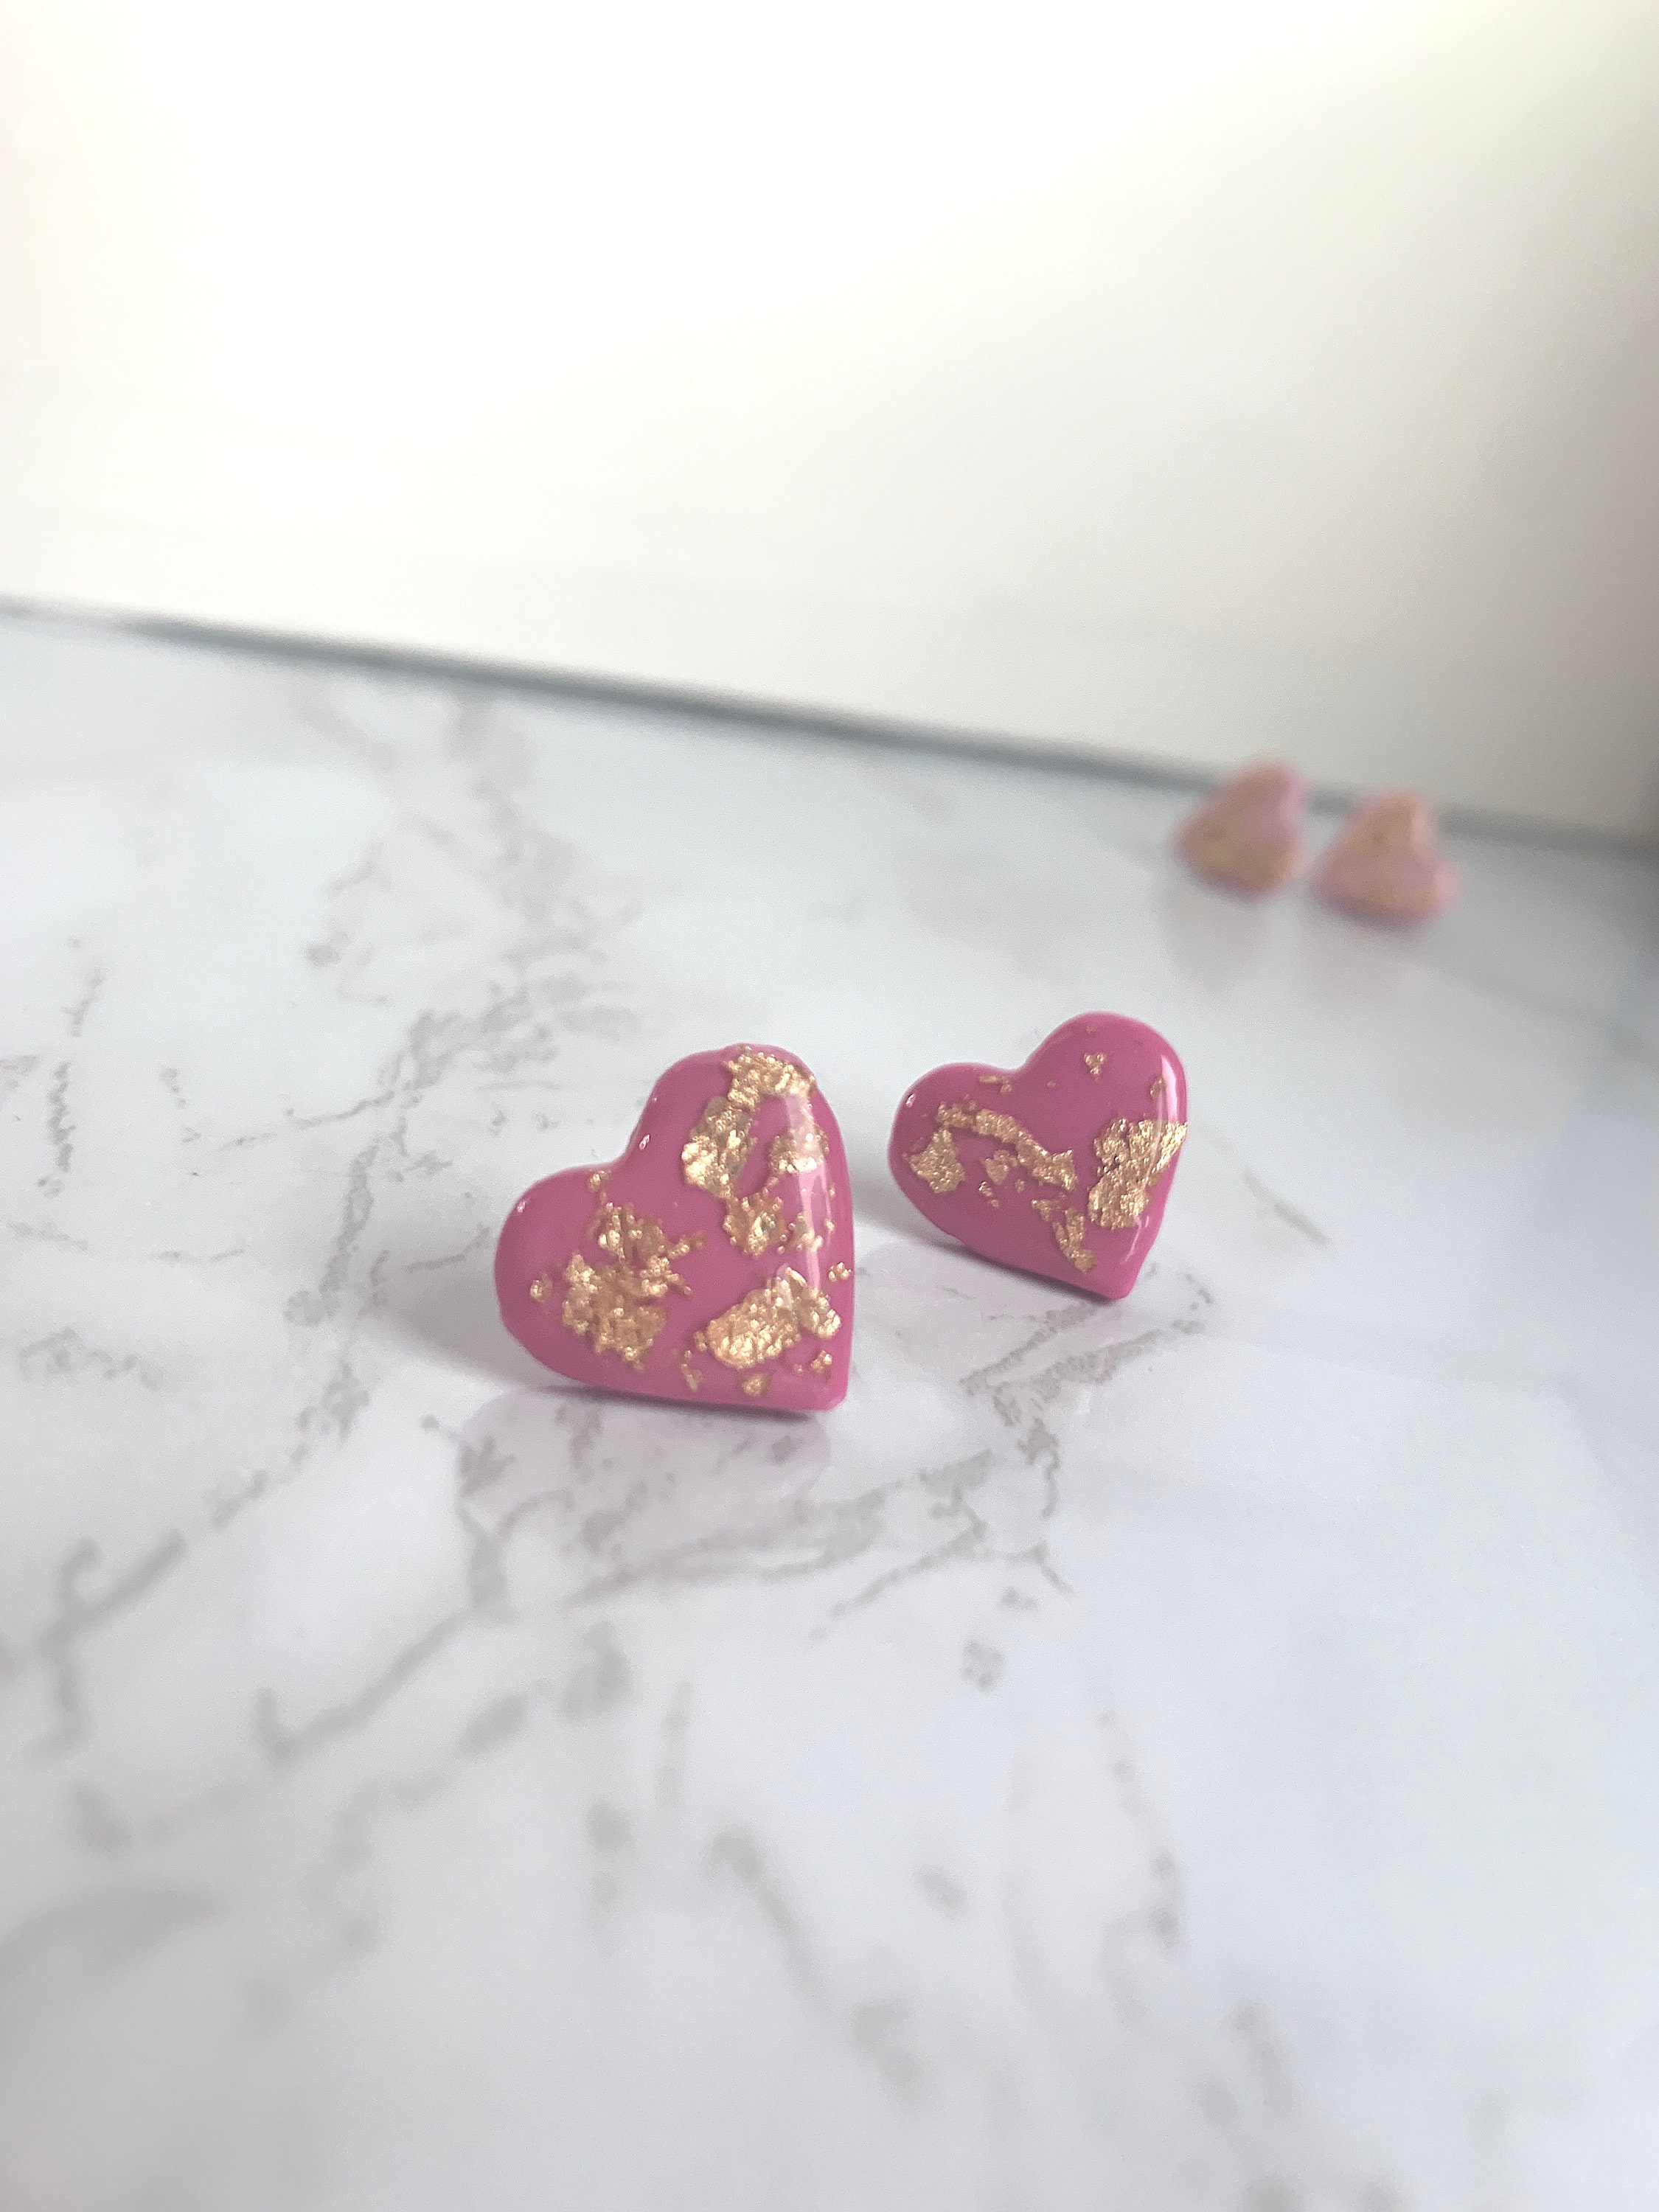 CLAY HEART EARRINGS Handmade Valentine's Day Earrings - Etsy UK